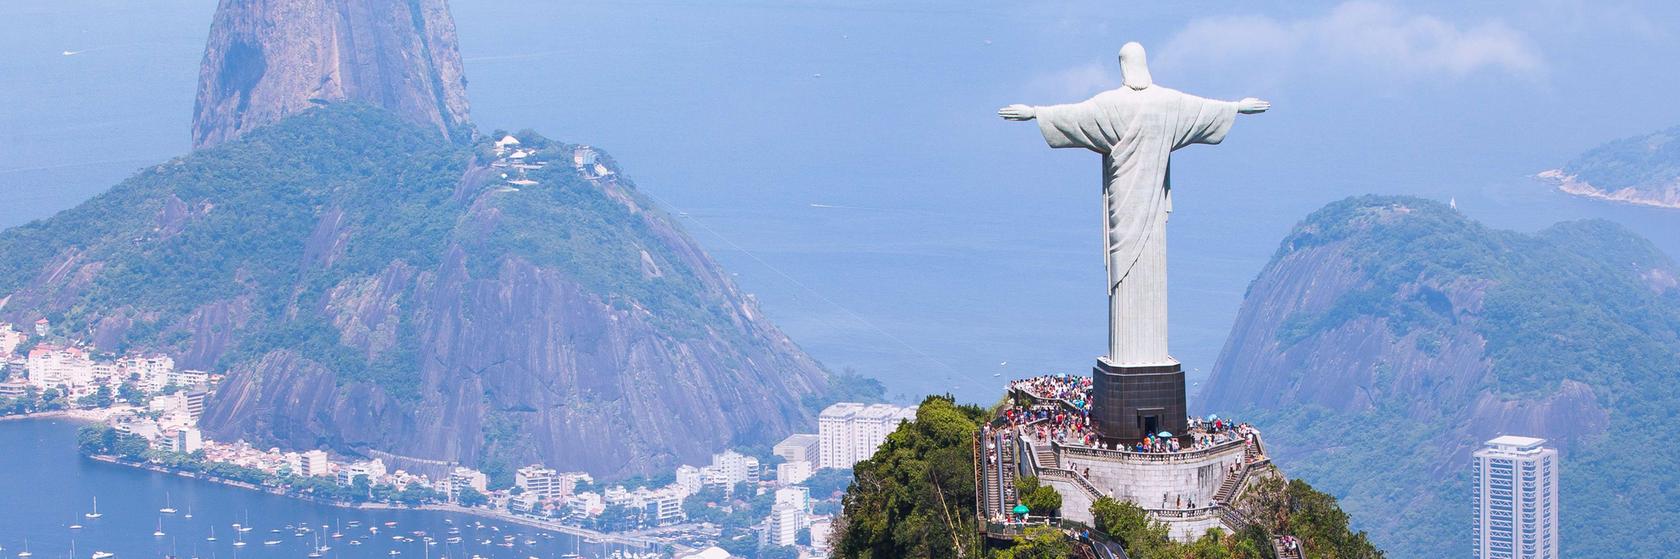 Počasí a kdy jet  Rio de Janeira a okolí